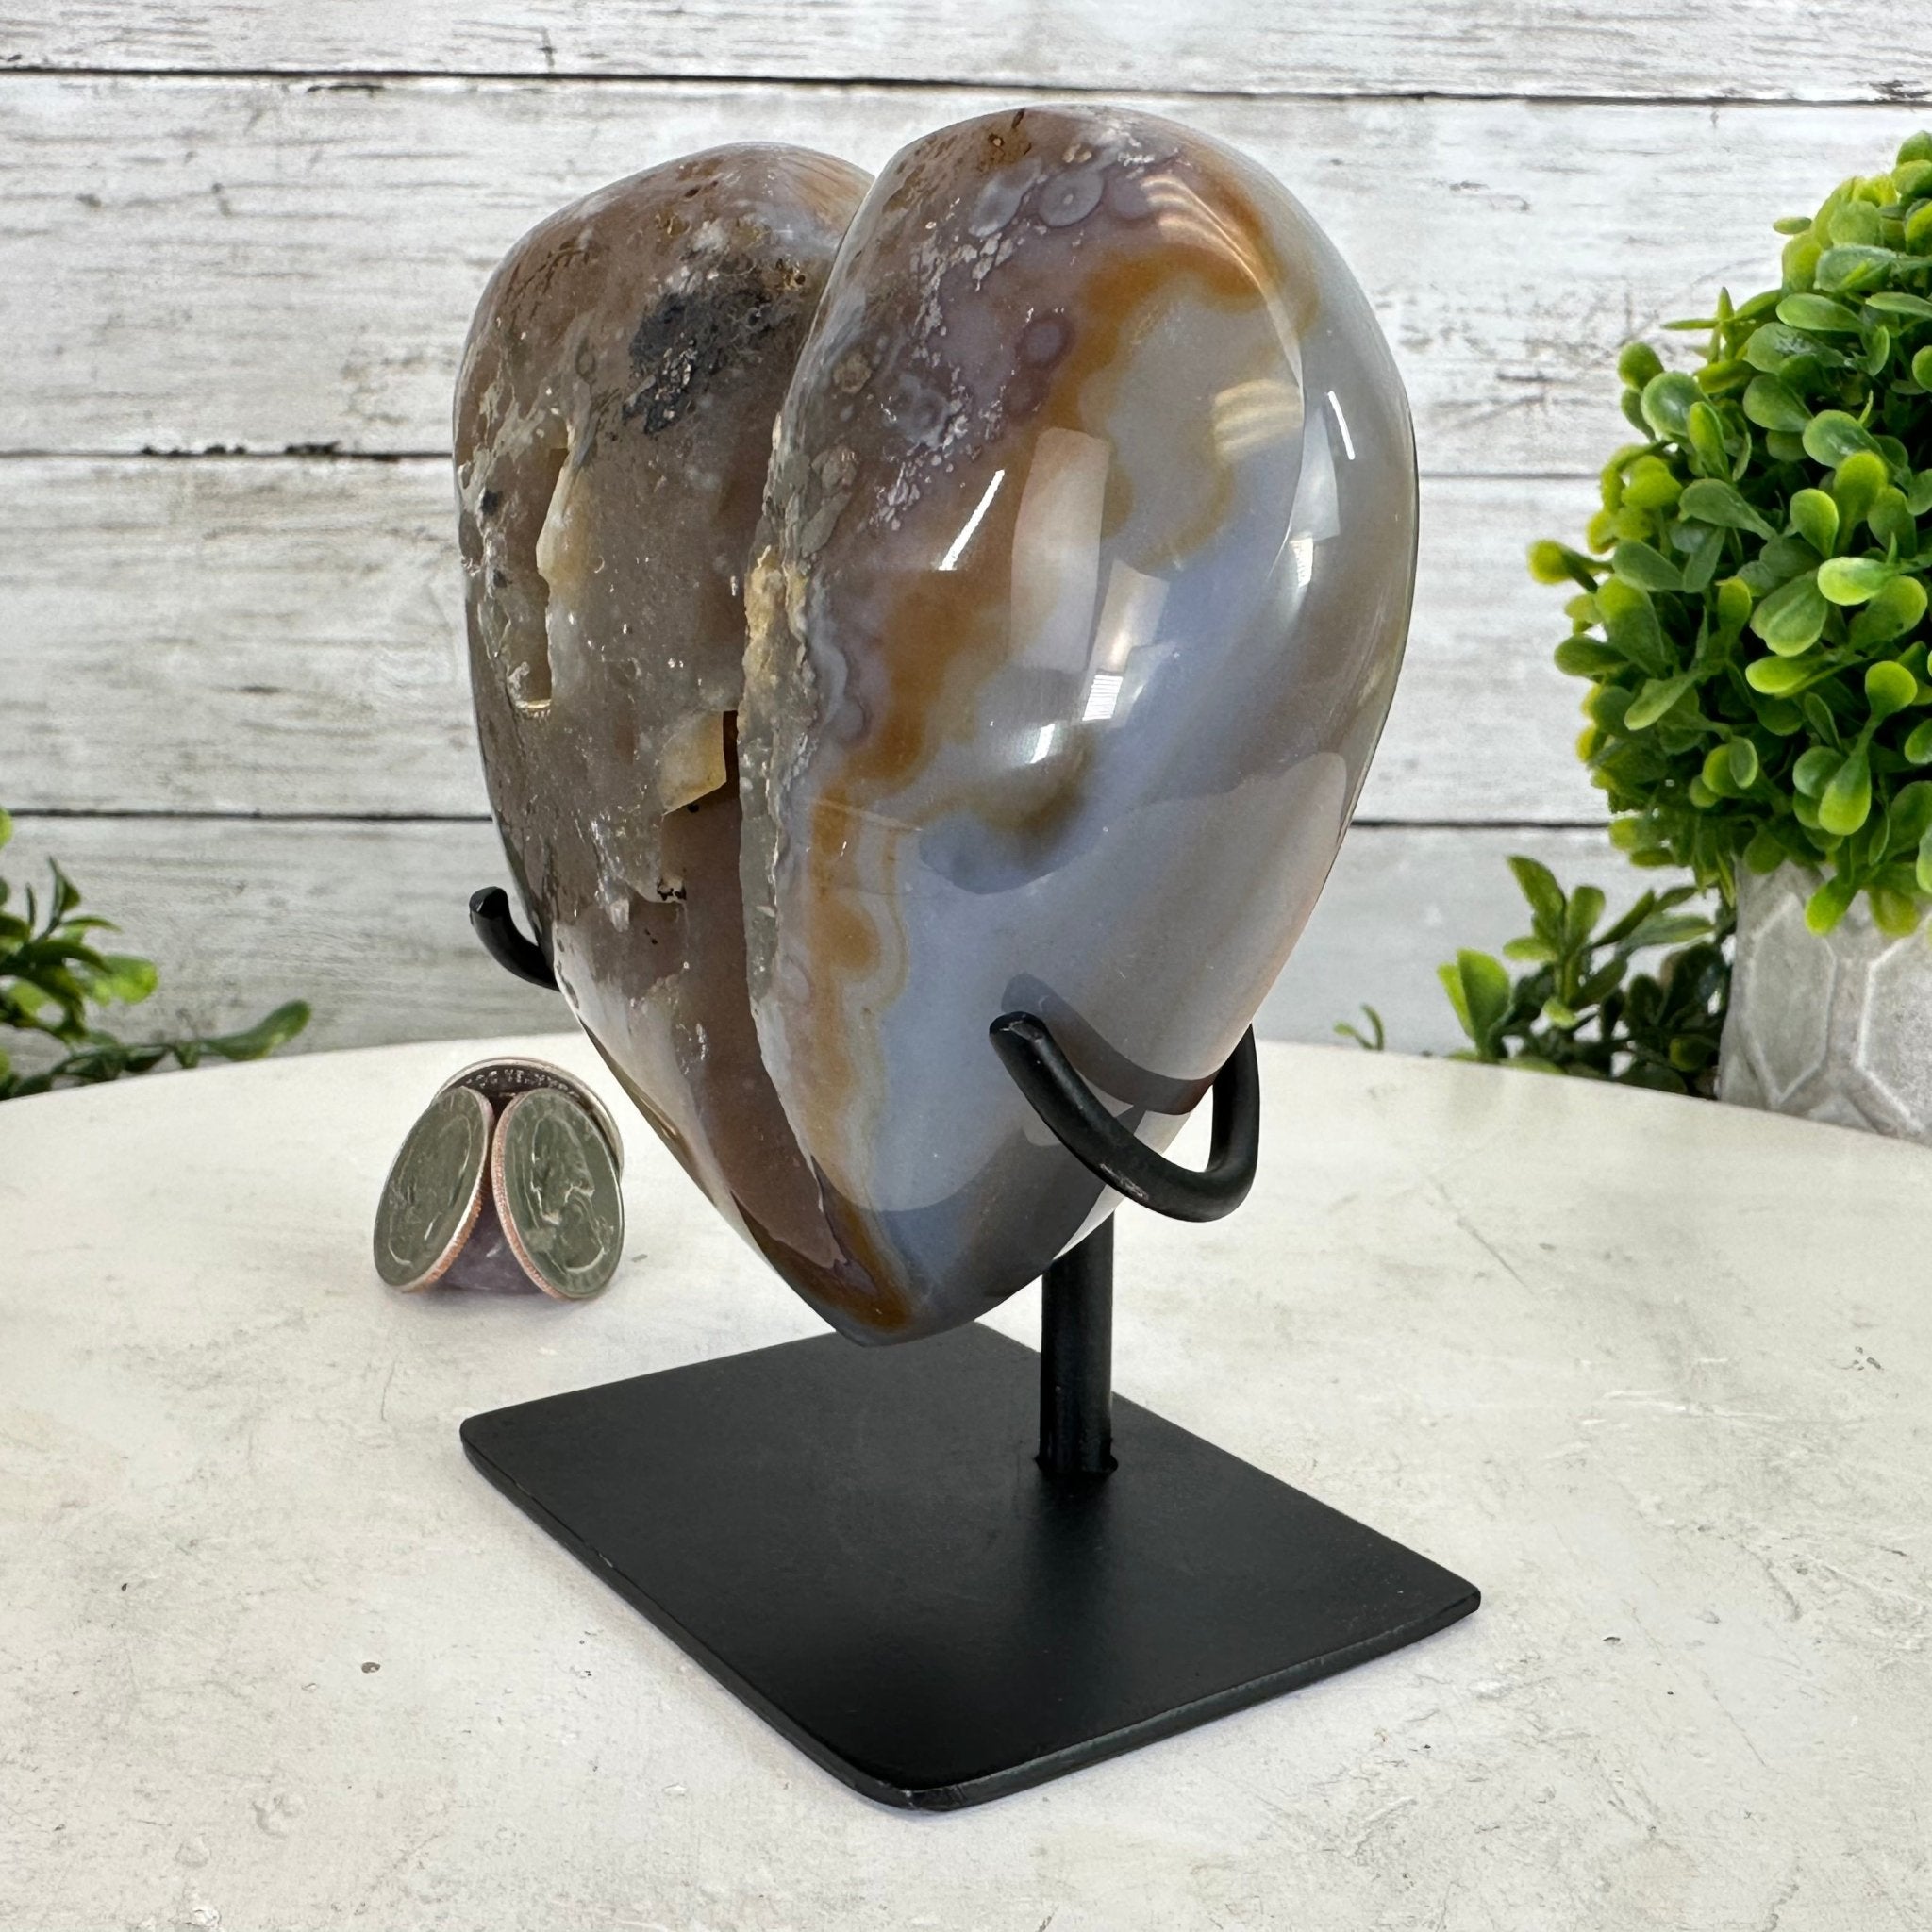 Polished Agate Heart Geode on a Metal Stand, 1.4 lbs & 4.4" Tall, Model #5468-0023 by Brazil Gems - Brazil GemsBrazil GemsPolished Agate Heart Geode on a Metal Stand, 1.4 lbs & 4.4" Tall, Model #5468-0023 by Brazil GemsHearts5468-0023